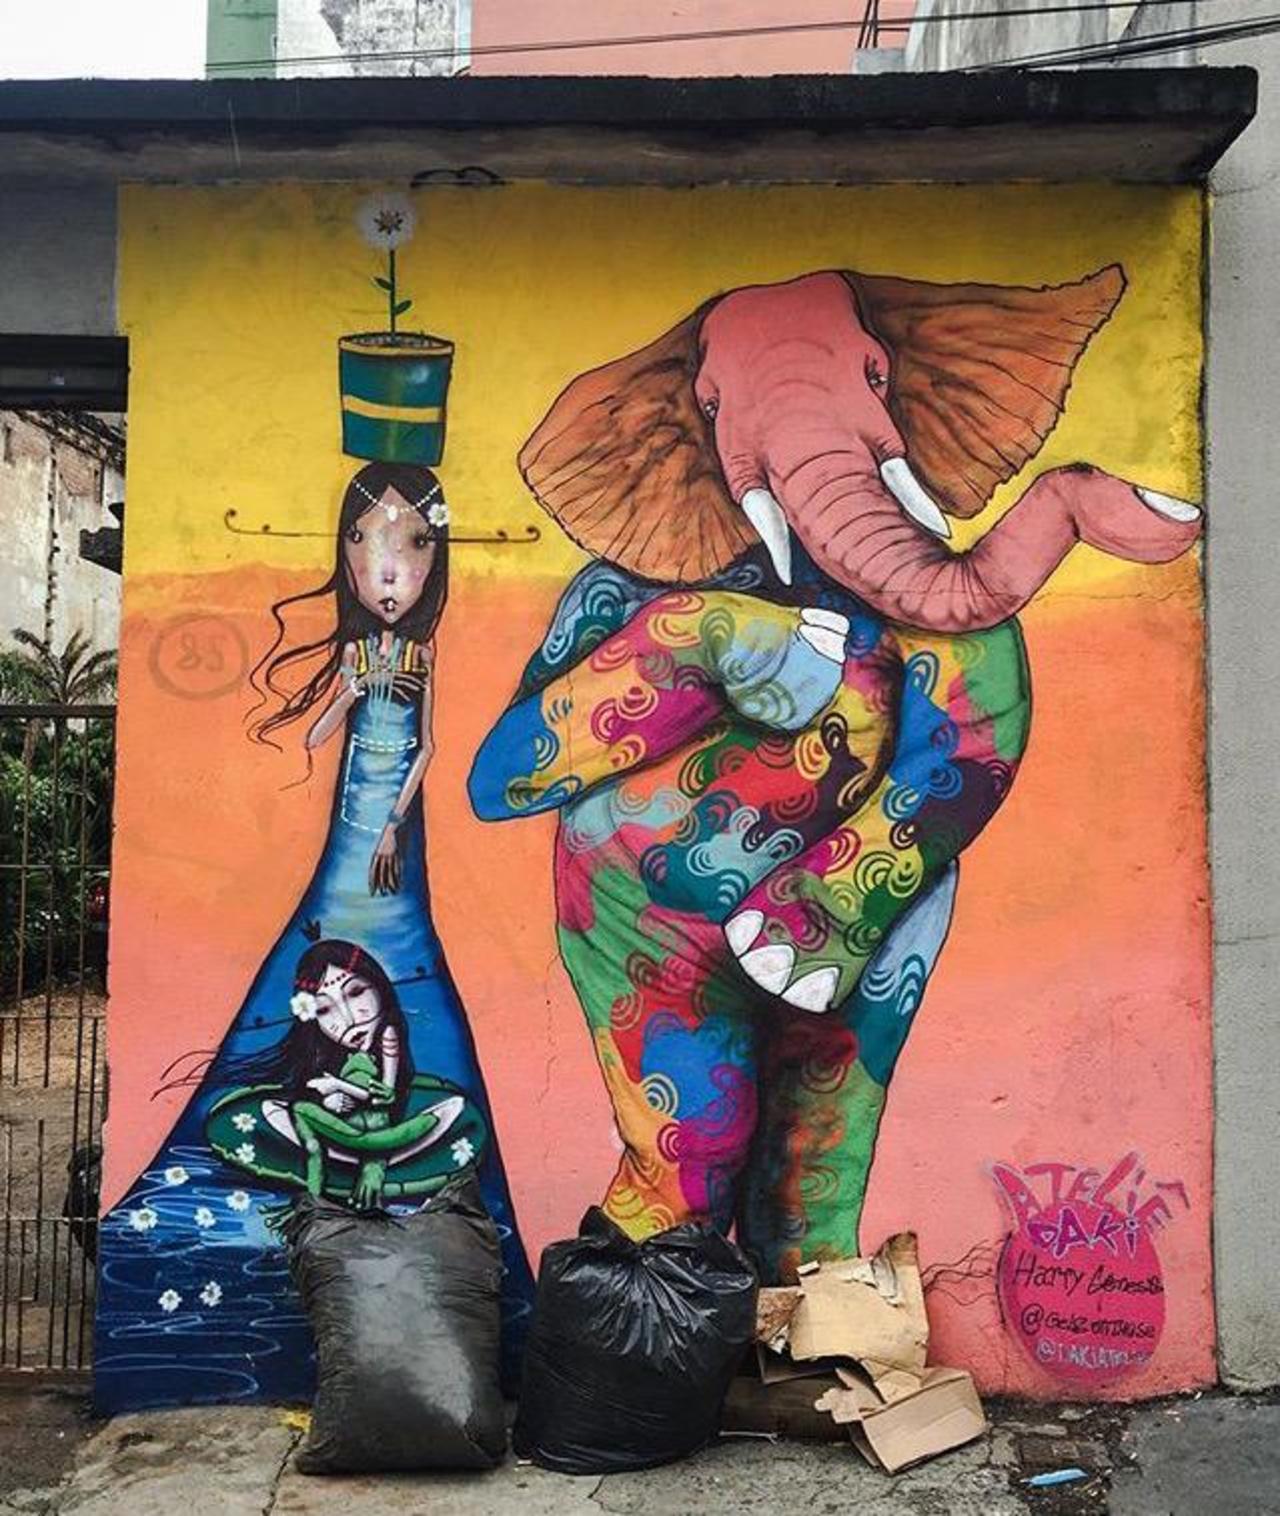 Street Art by Harry Geneis & Gelson in São Paulo 

#art #mural #graffiti #streetart http://t.co/VEI7KdsR3p